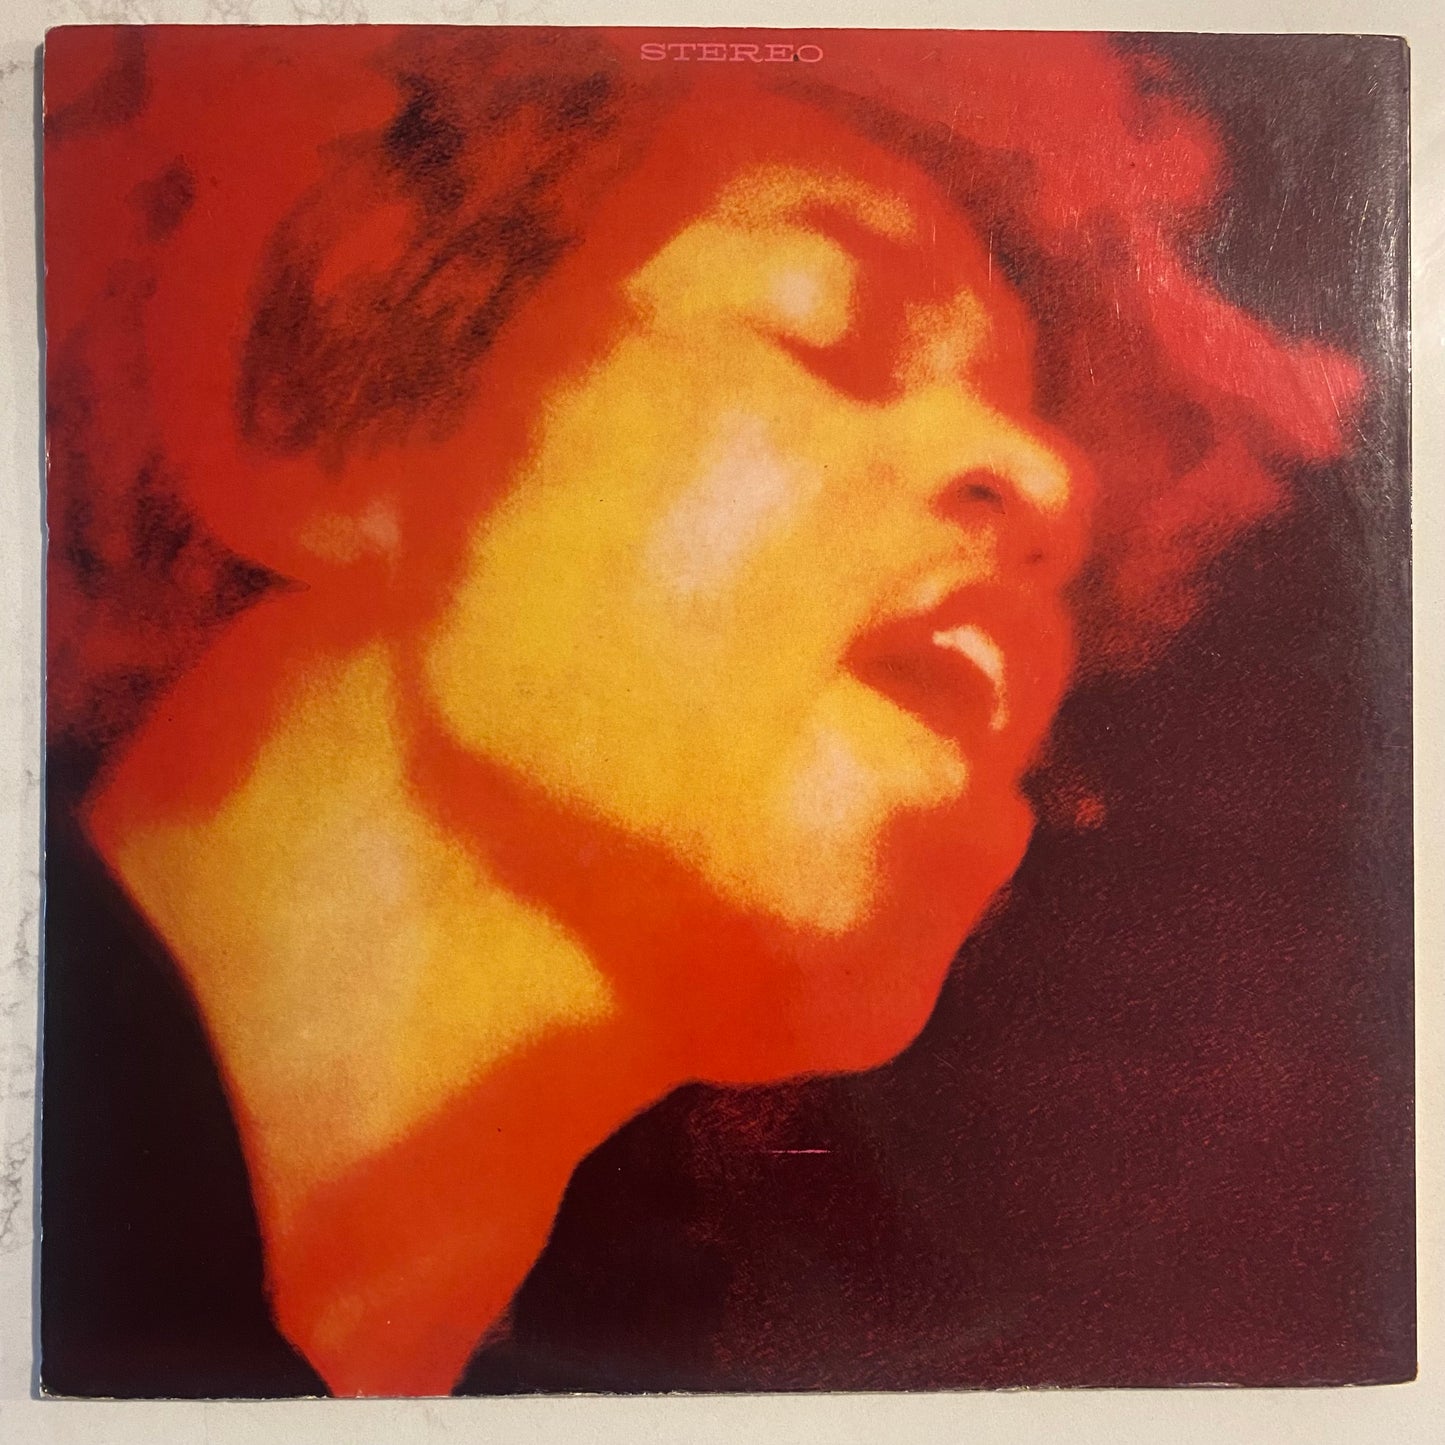 The Jimi Hendrix Experience - Electric Ladyland (2xLP, Album)